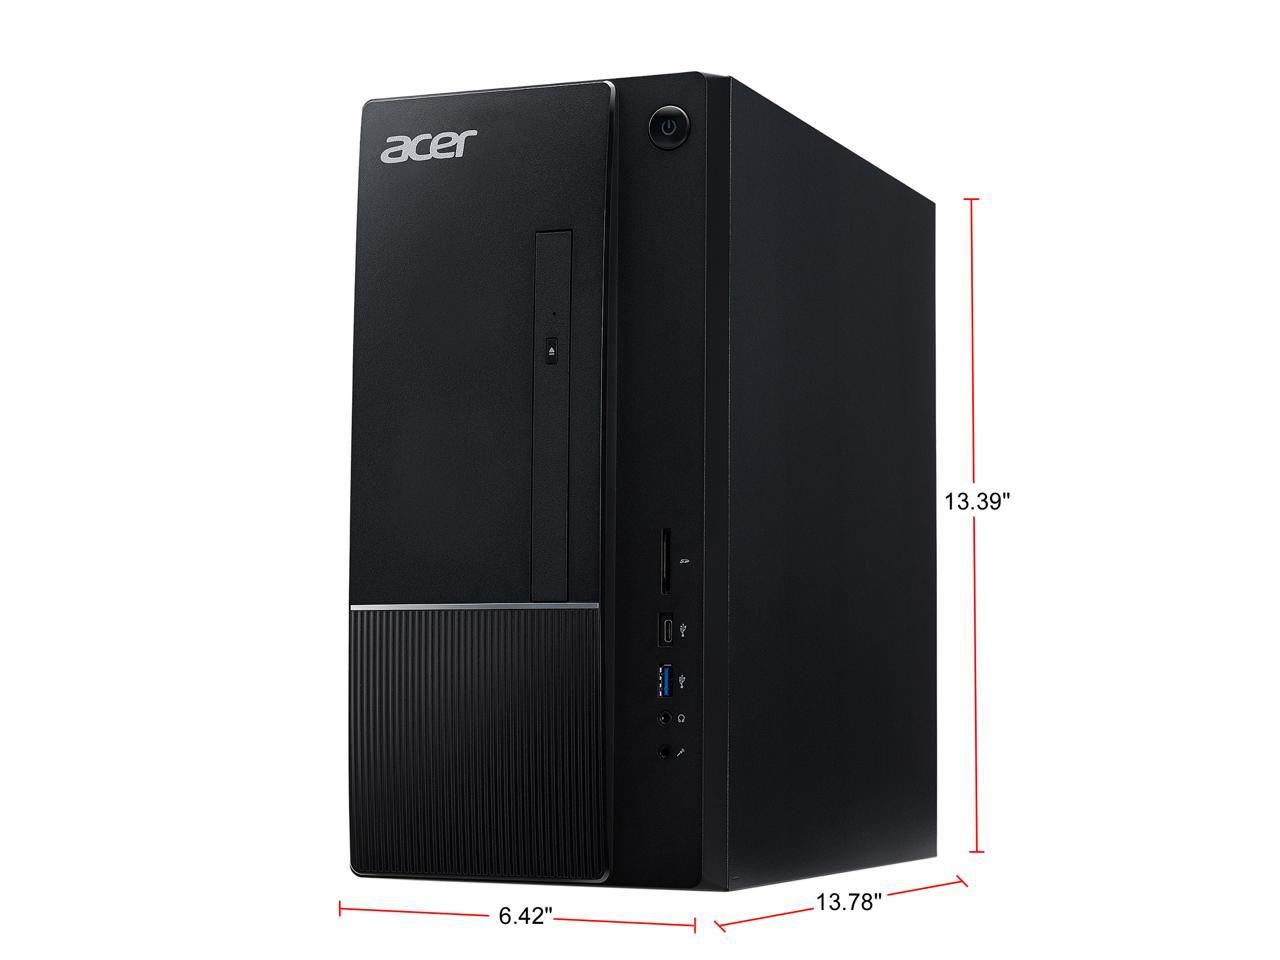 Acer Aspire TC - Intel Core i5-10400 - 8 GB DDR4 - 512 GB SSD - Intel UHD Graphics 630 - Windows 10 Home - Desktop PC (TC-875-UR13)